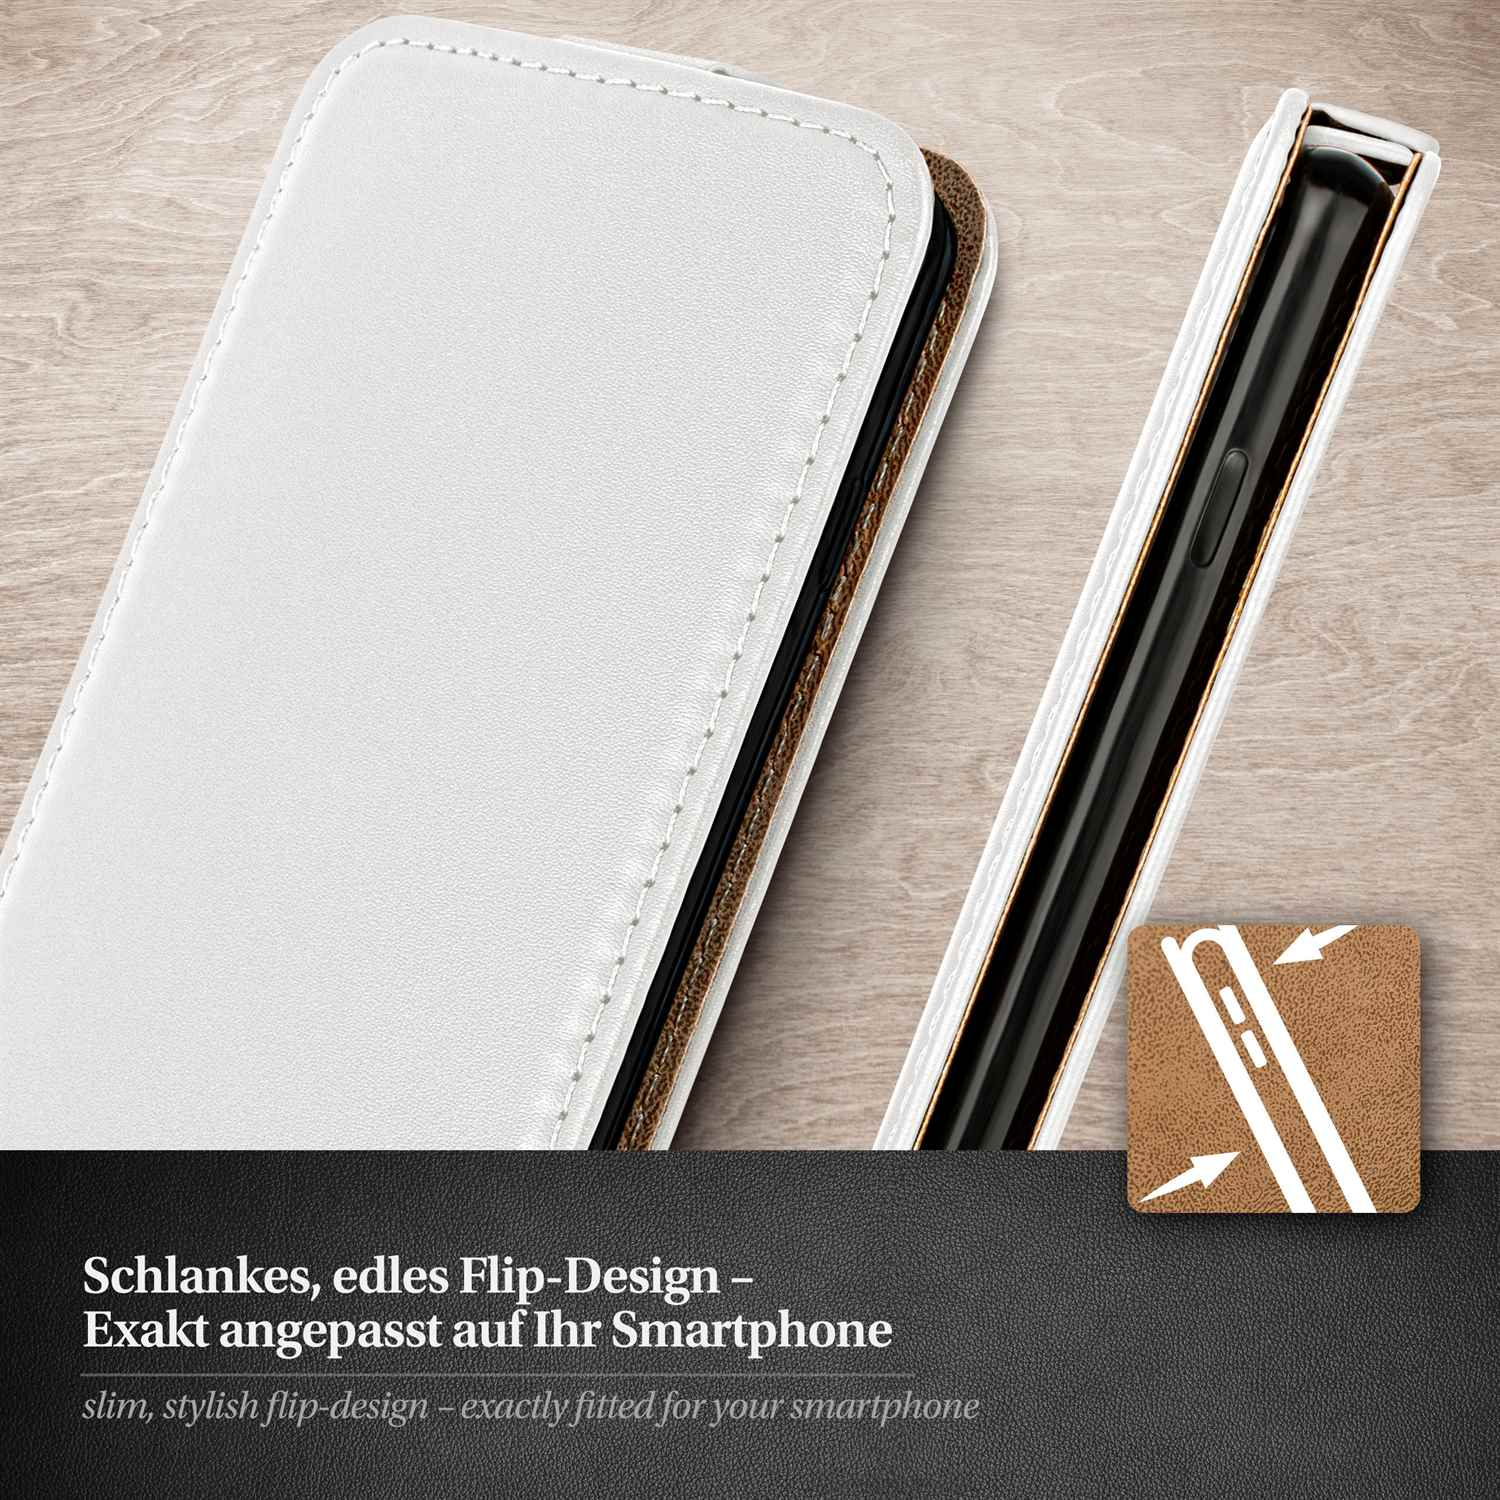 5G, Pearl-White S20 Case, Flip Flip Samsung, MOEX Galaxy Cover,